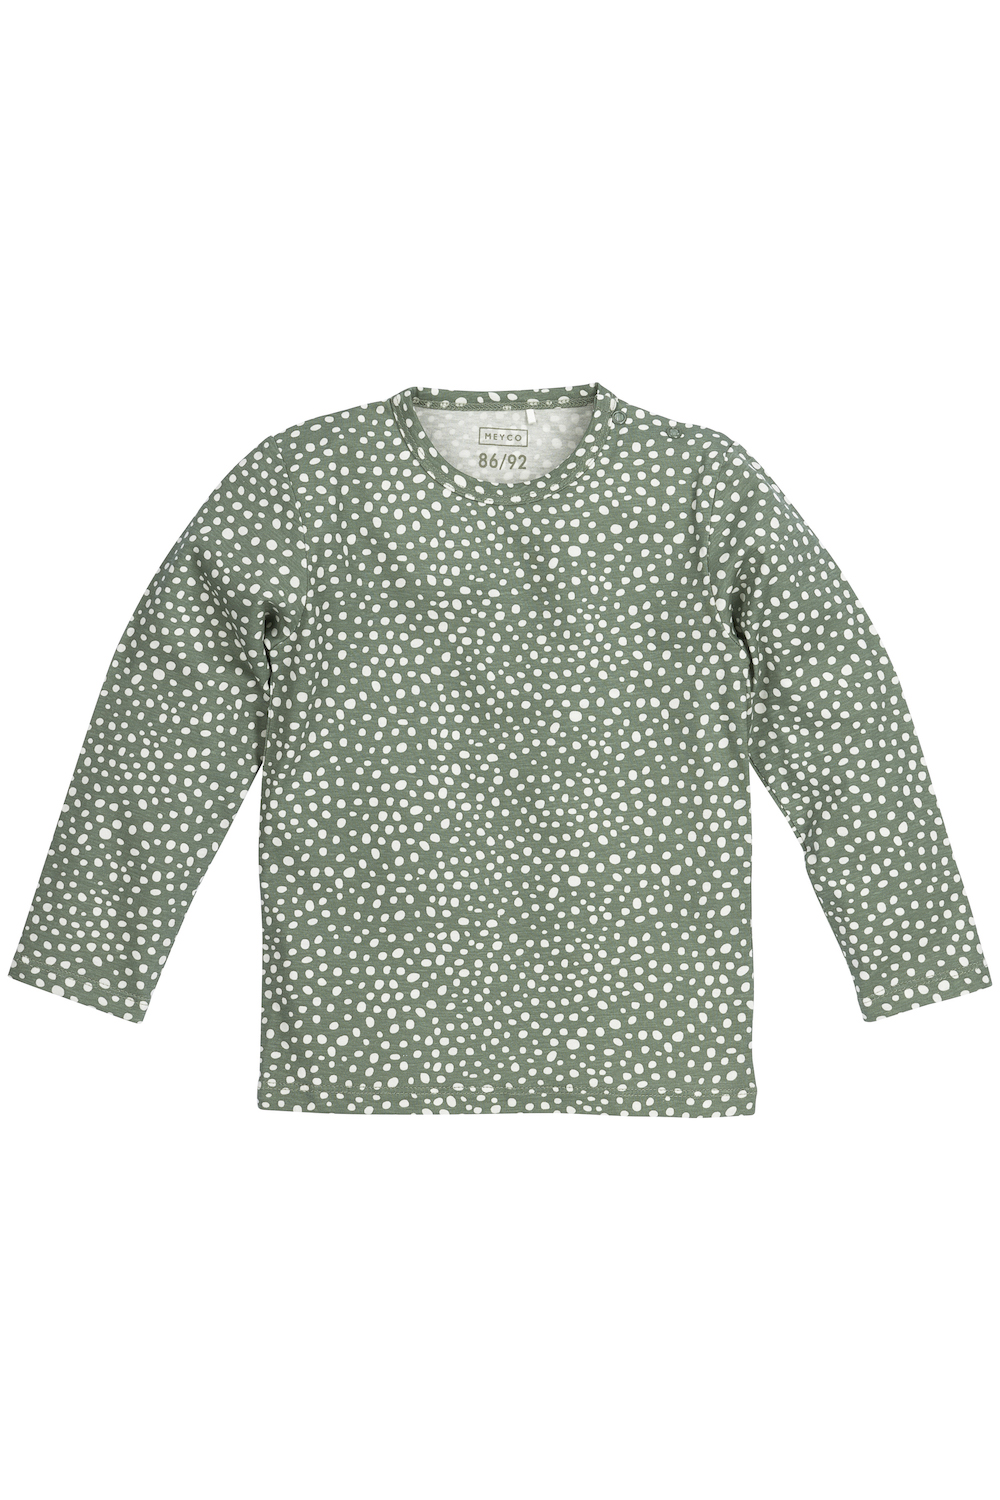 Pyjama 2-pack Cheetah - forest green - 98/104